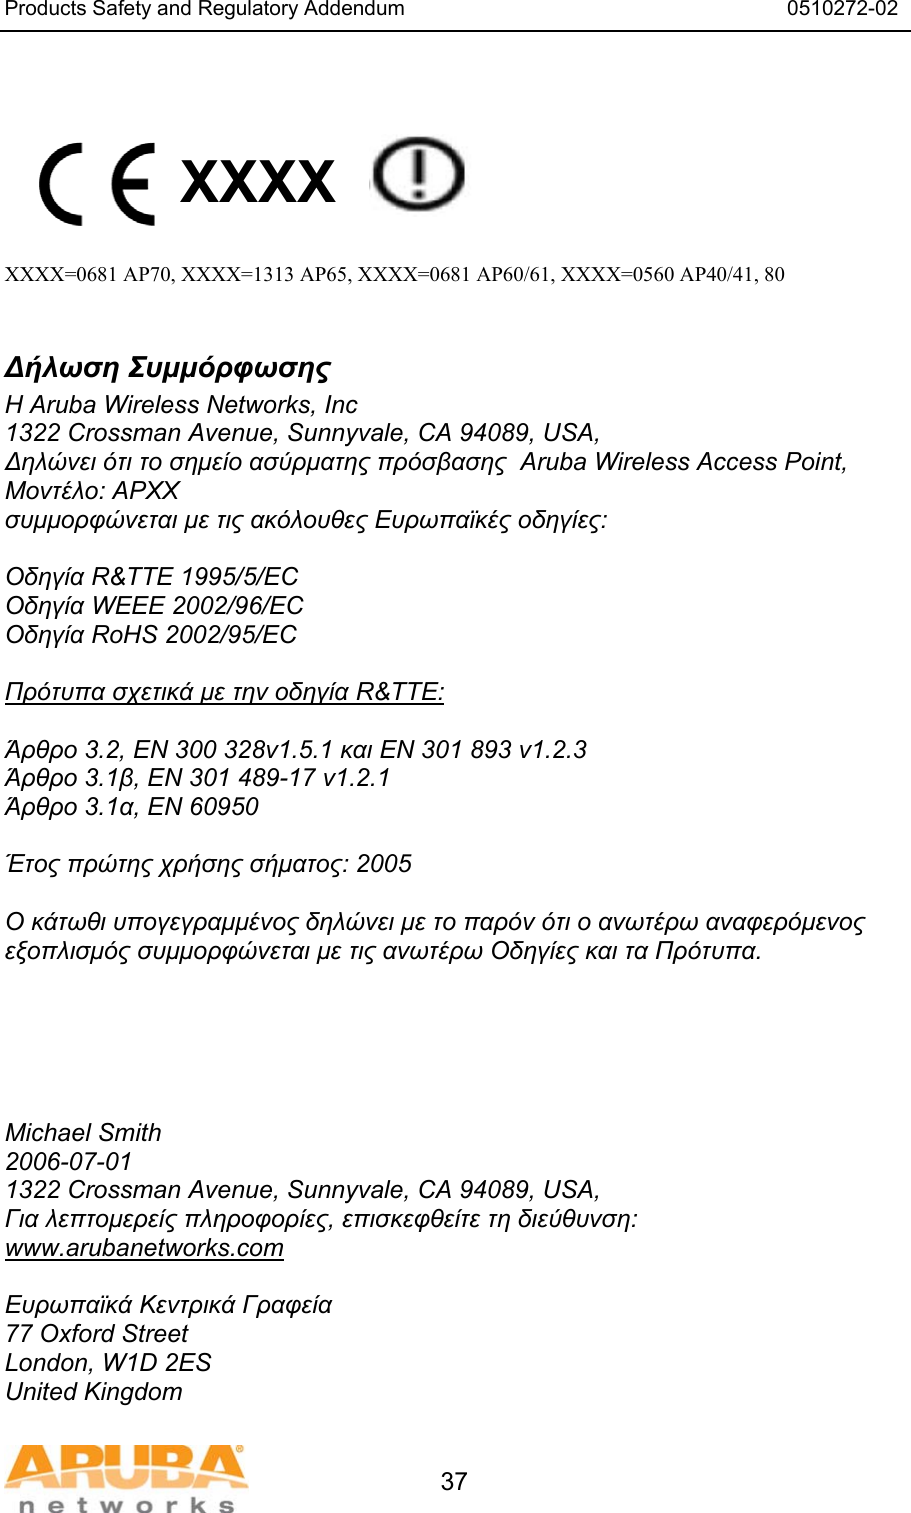 Products Safety and Regulatory Addendum                                                                  0510272-02   37   XXXX    XXXX=0681 AP70, XXXX=1313 AP65, XXXX=0681 AP60/61, XXXX=0560 AP40/41, 80  Δήλωση Συμμόρφωσης Η Aruba Wireless Networks, Inc 1322 Crossman Avenue, Sunnyvale, CA 94089, USA, Δηλώνει ότι το σημείο ασύρματης πρόσβασης  Aruba Wireless Access Point, Μοντέλο: APXX συμμορφώνεται με τις ακόλουθες Ευρωπαϊκές οδηγίες:  Οδηγία R&amp;TTE 1995/5/EC Οδηγία WEEE 2002/96/EC Οδηγία RoHS 2002/95/EC  Πρότυπα σχετικά με την οδηγία R&amp;TTE:  Άρθρο 3.2, EN 300 328v1.5.1 και EN 301 893 v1.2.3 Άρθρο 3.1β, EN 301 489-17 v1.2.1 Άρθρο 3.1α, EN 60950  Έτος πρώτης χρήσης σήματος: 2005  Ο κάτωθι υπογεγραμμένος δηλώνει με το παρόν ότι ο ανωτέρω αναφερόμενος εξοπλισμός συμμορφώνεται με τις ανωτέρω Οδηγίες και τα Πρότυπα.      Michael Smith 2006-07-01 1322 Crossman Avenue, Sunnyvale, CA 94089, USA, Για λεπτομερείς πληροφορίες, επισκεφθείτε τη διεύθυνση: www.arubanetworks.com  Ευρωπαϊκά Κεντρικά Γραφεία 77 Oxford Street London, W1D 2ES United Kingdom 